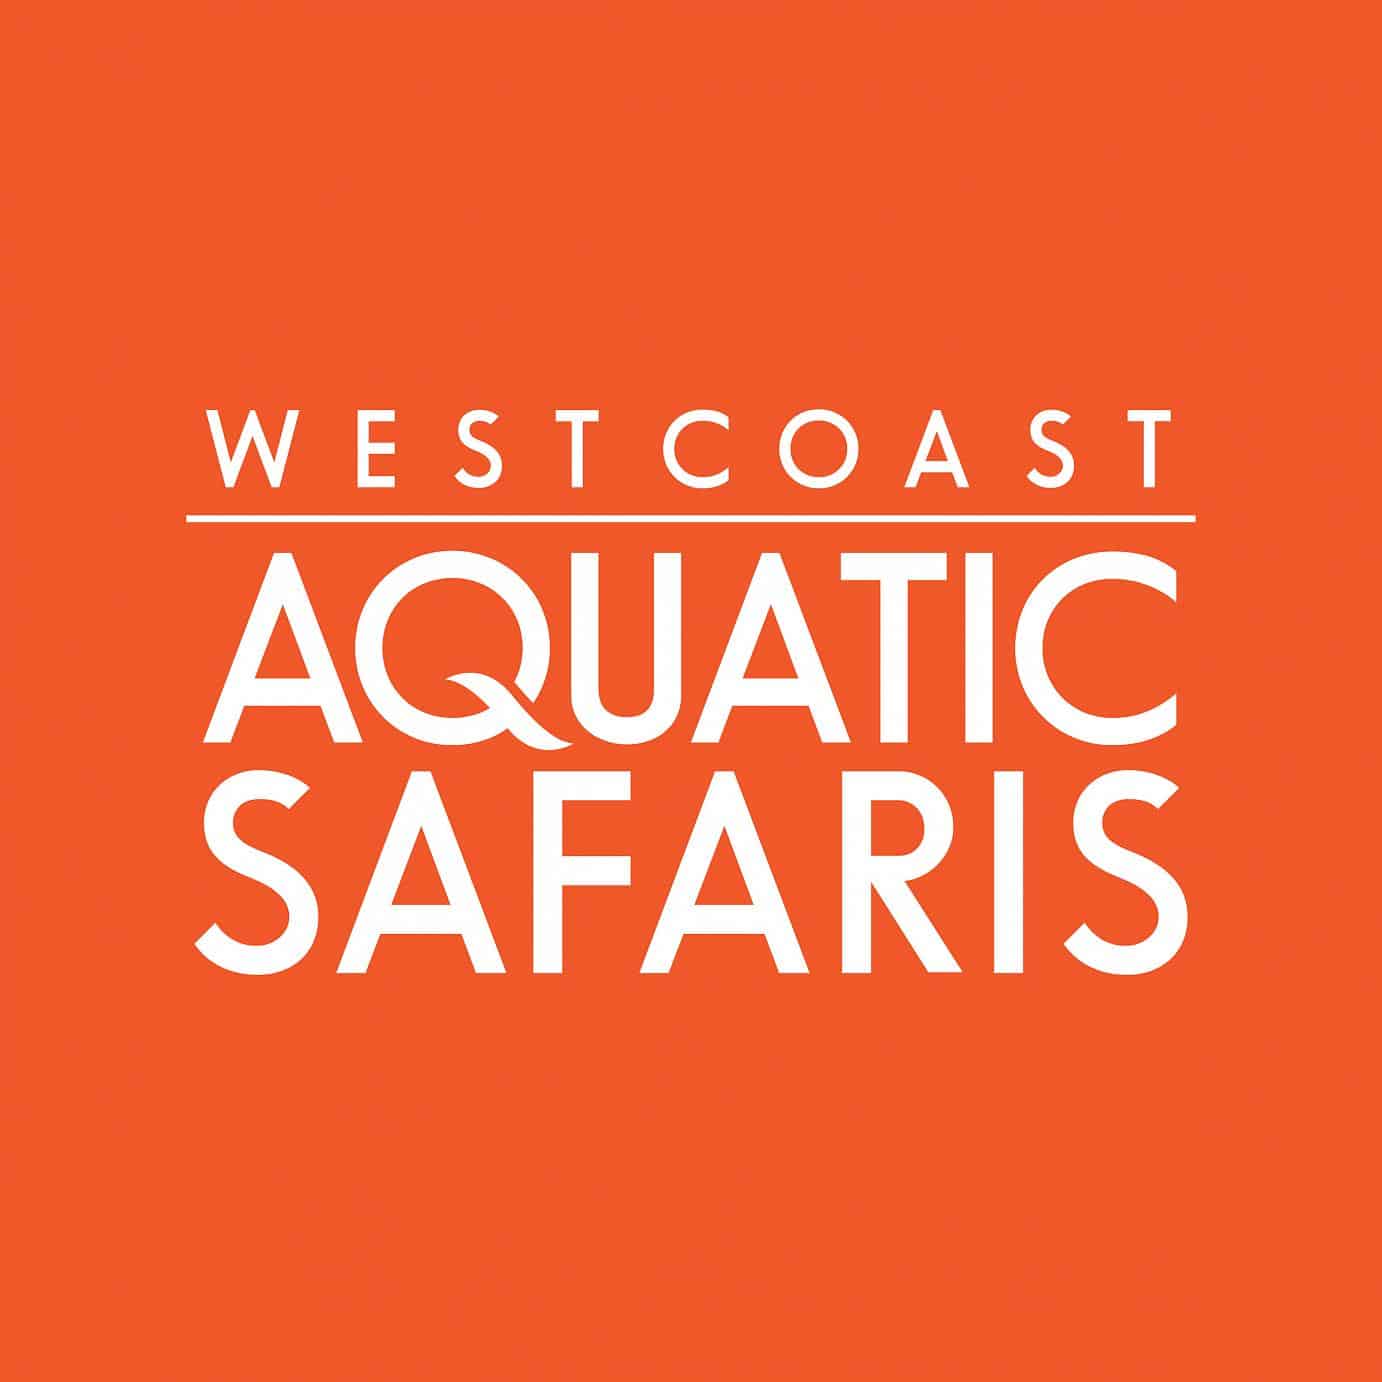 west coast aquatic safaris promo code